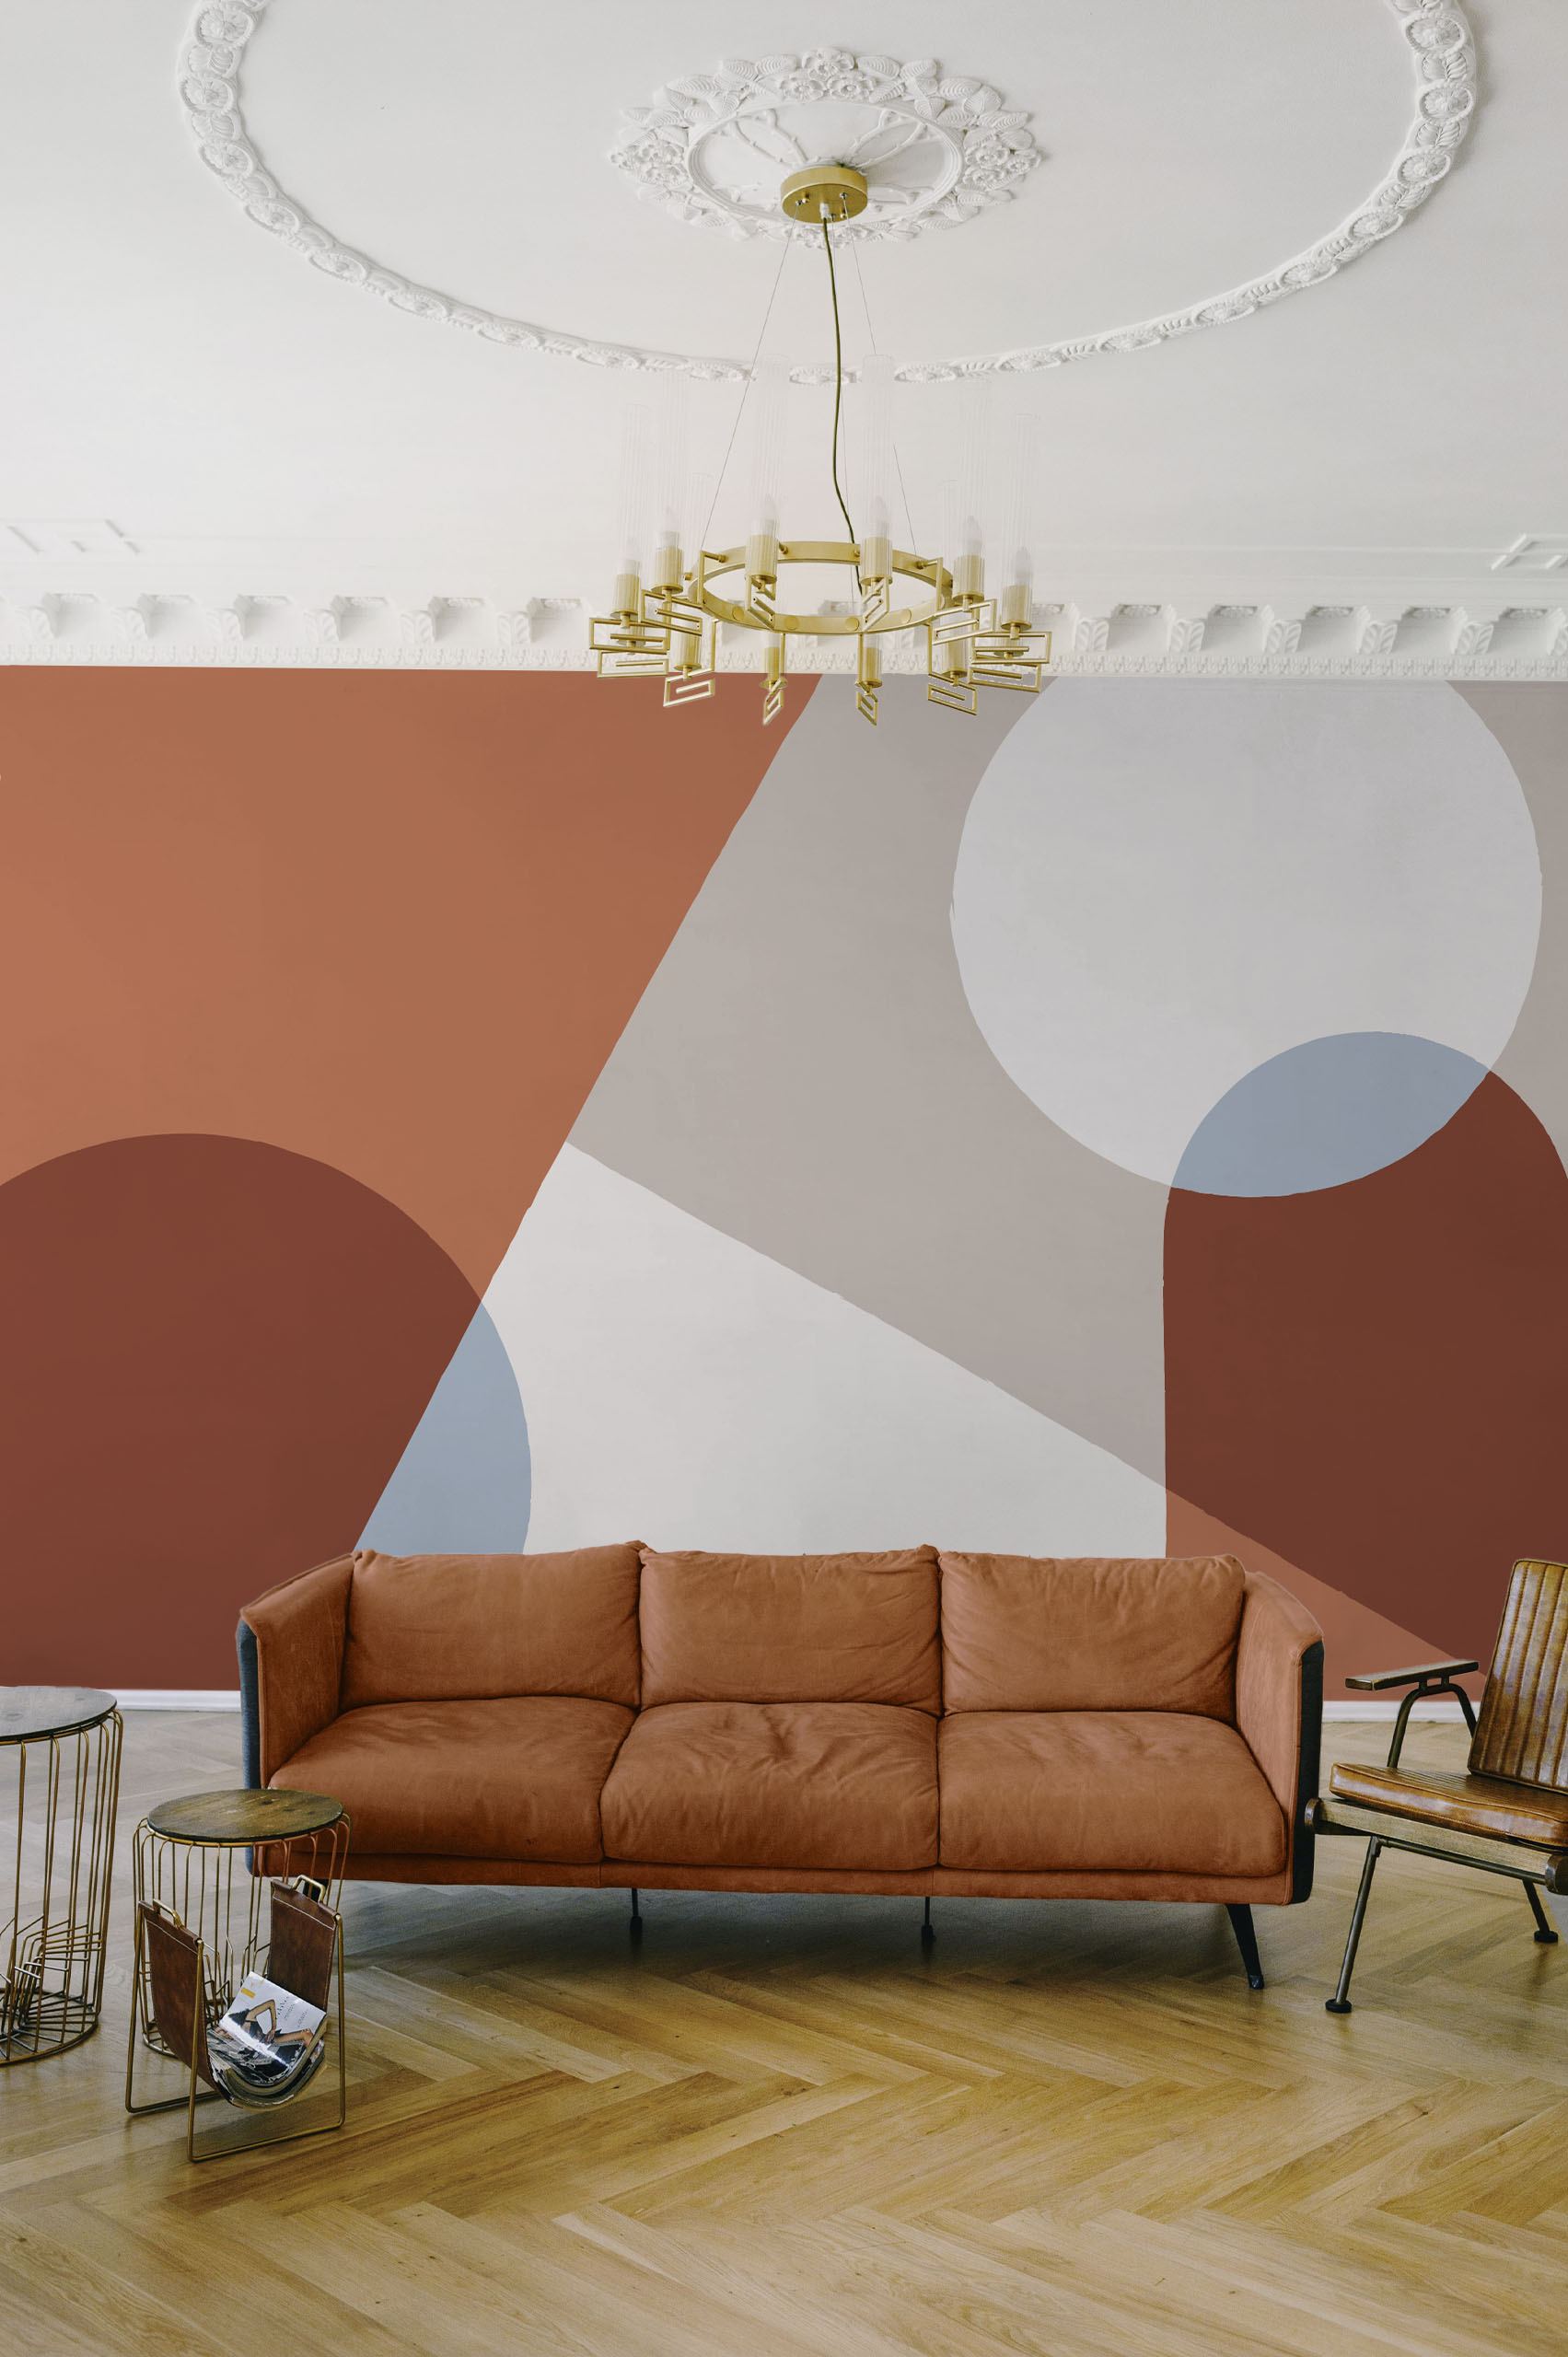 papel pintado n349 formas asimetricas color terracota salon